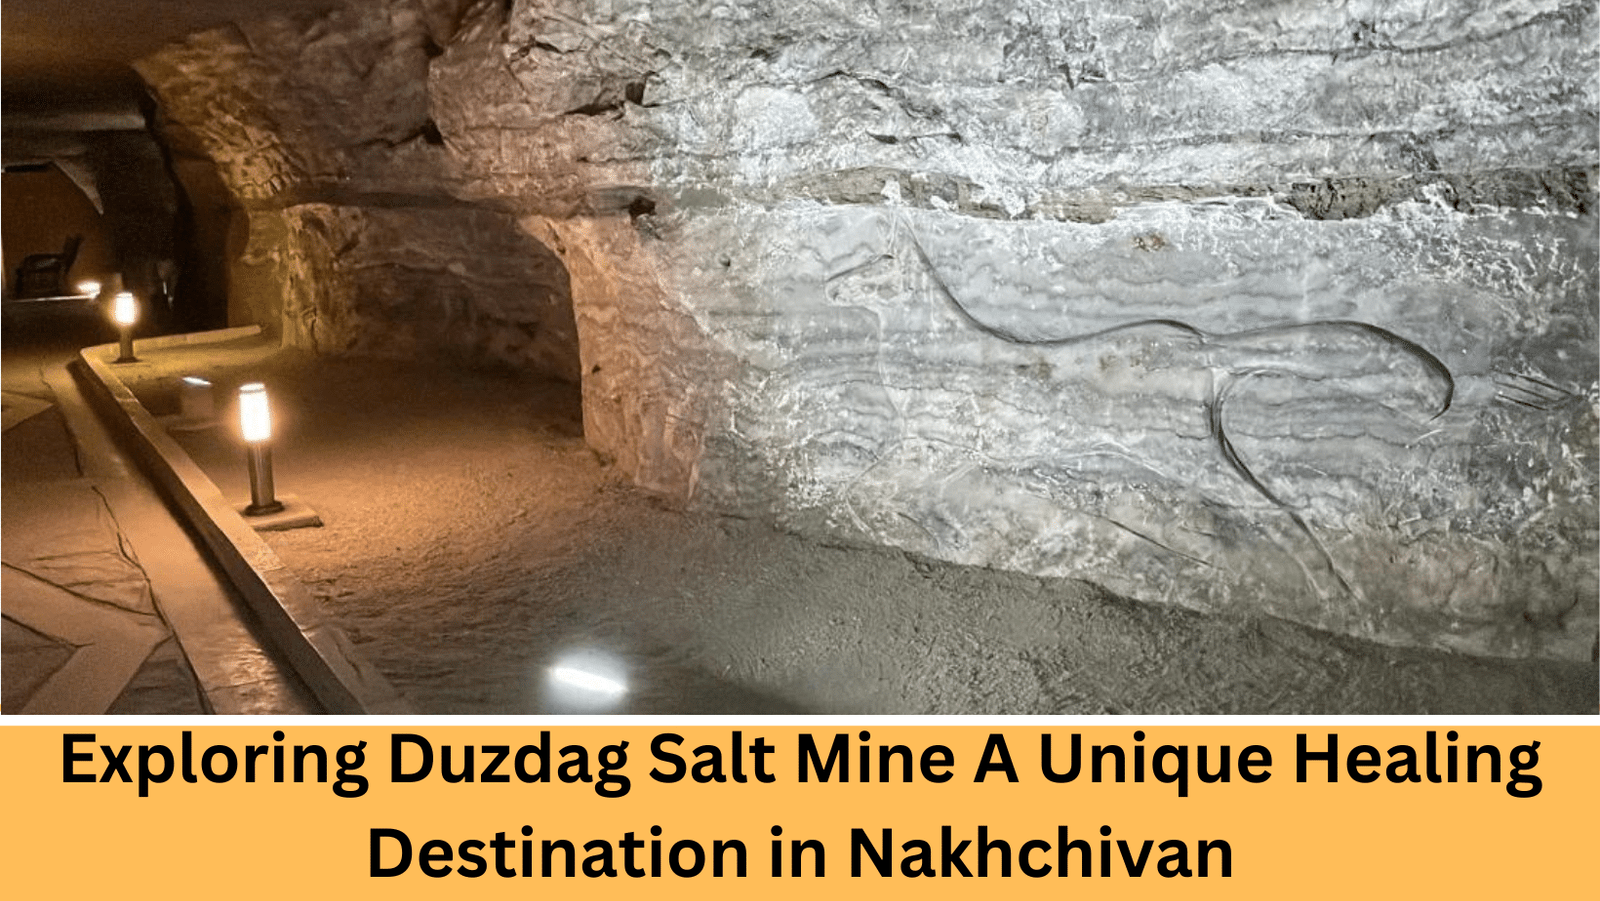 Exploring Duzdag Salt Mine A Unique Healing Destination in Nakhchivan